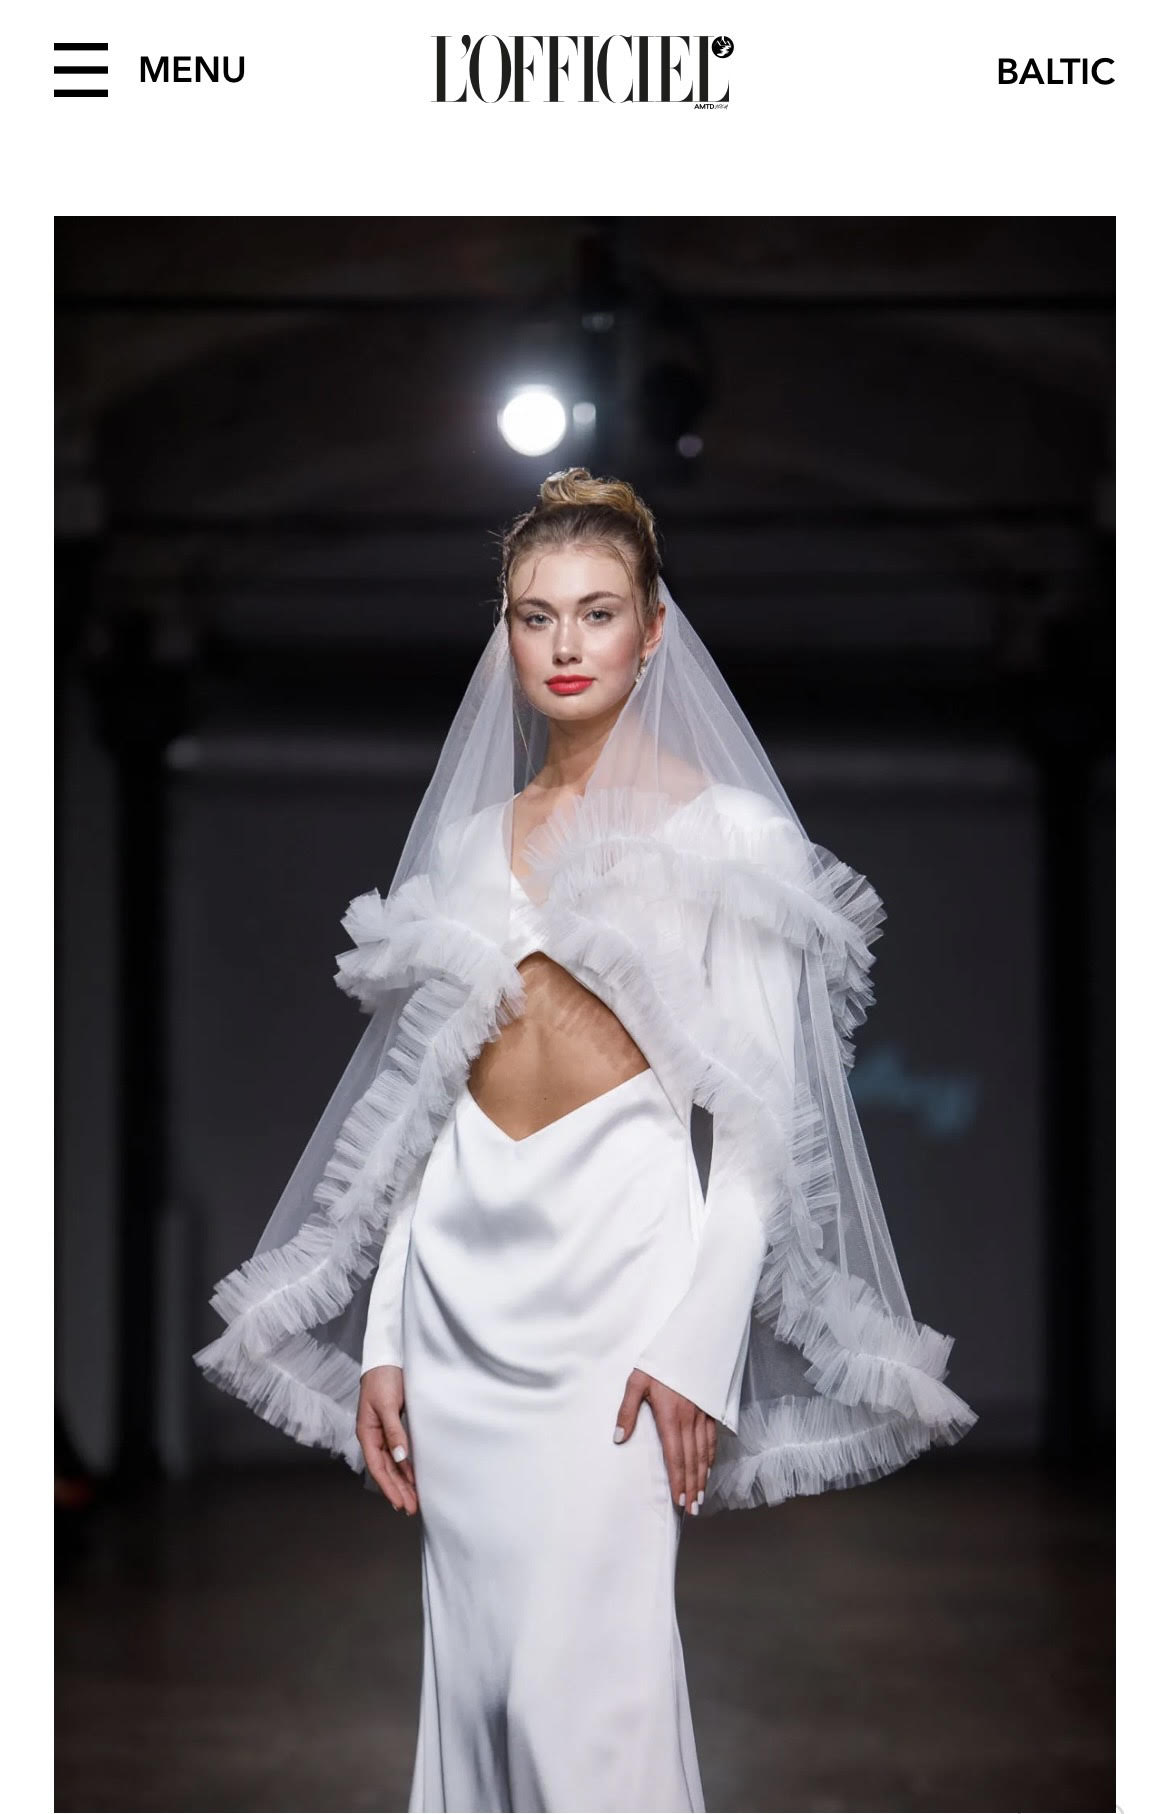 L’OFFICIEL Baltics publication – Amelii at Riga Fashion Week 2023